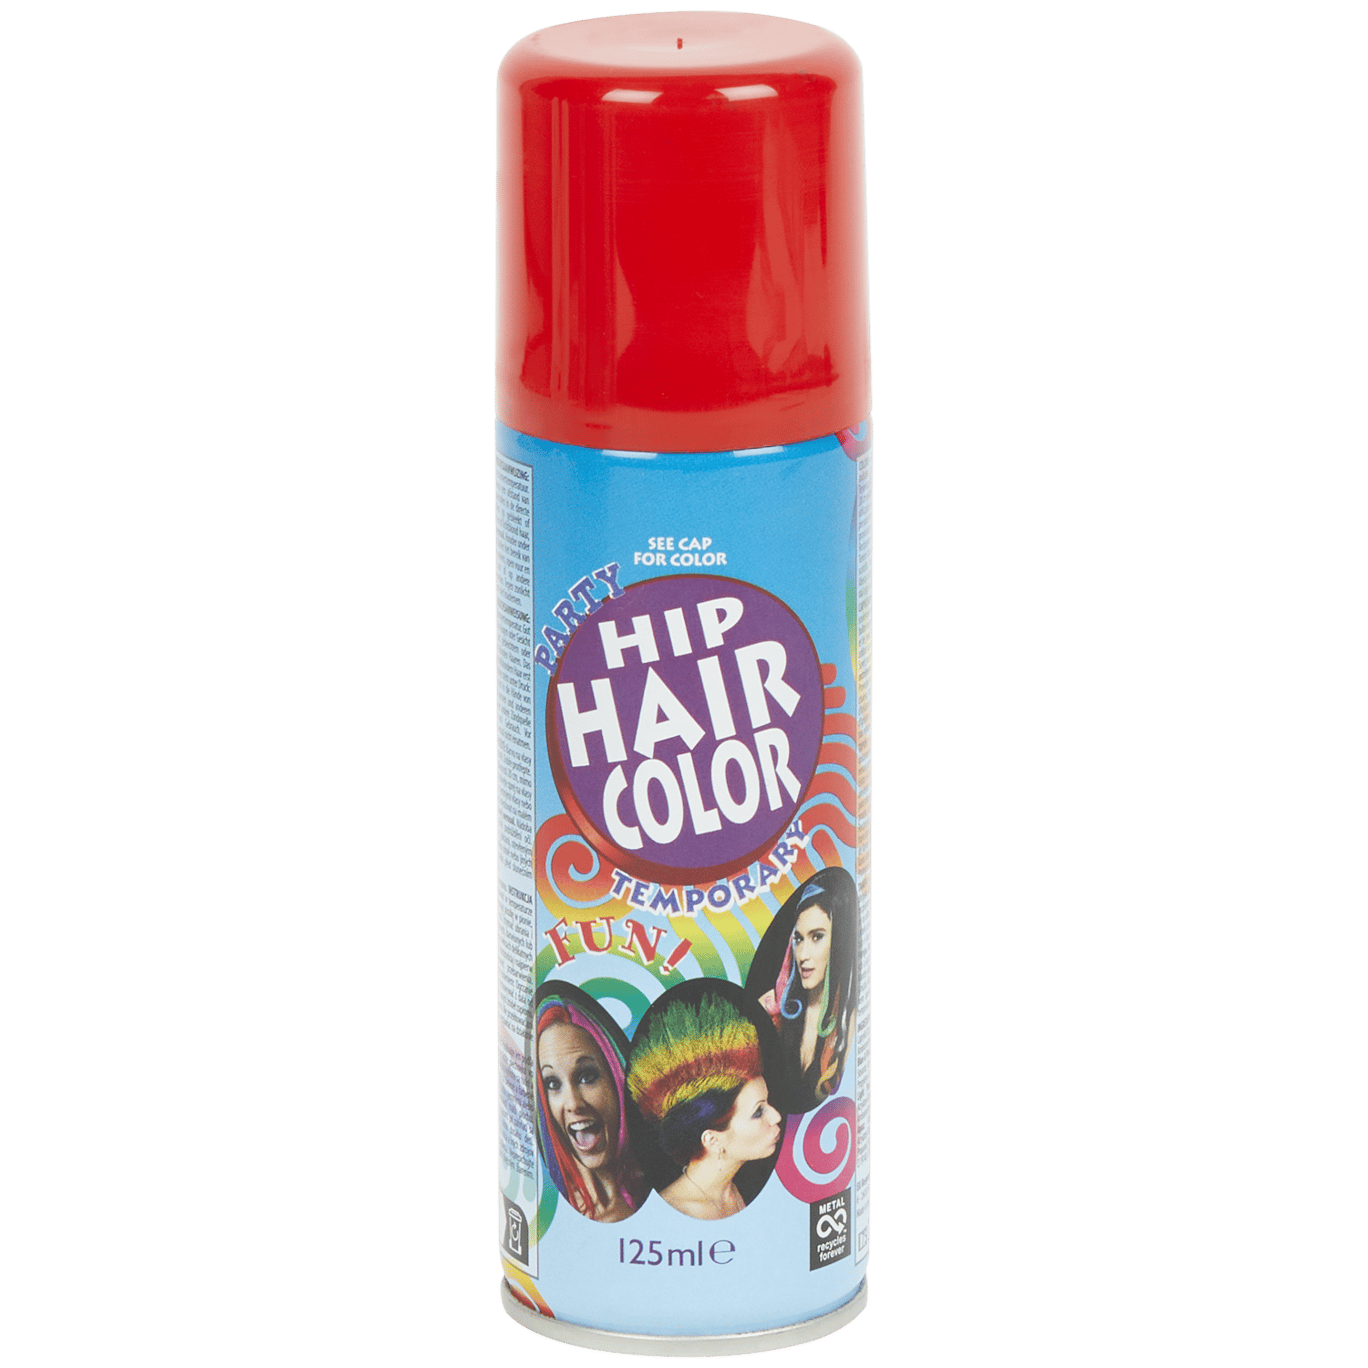 Spray para colorir o cabelo